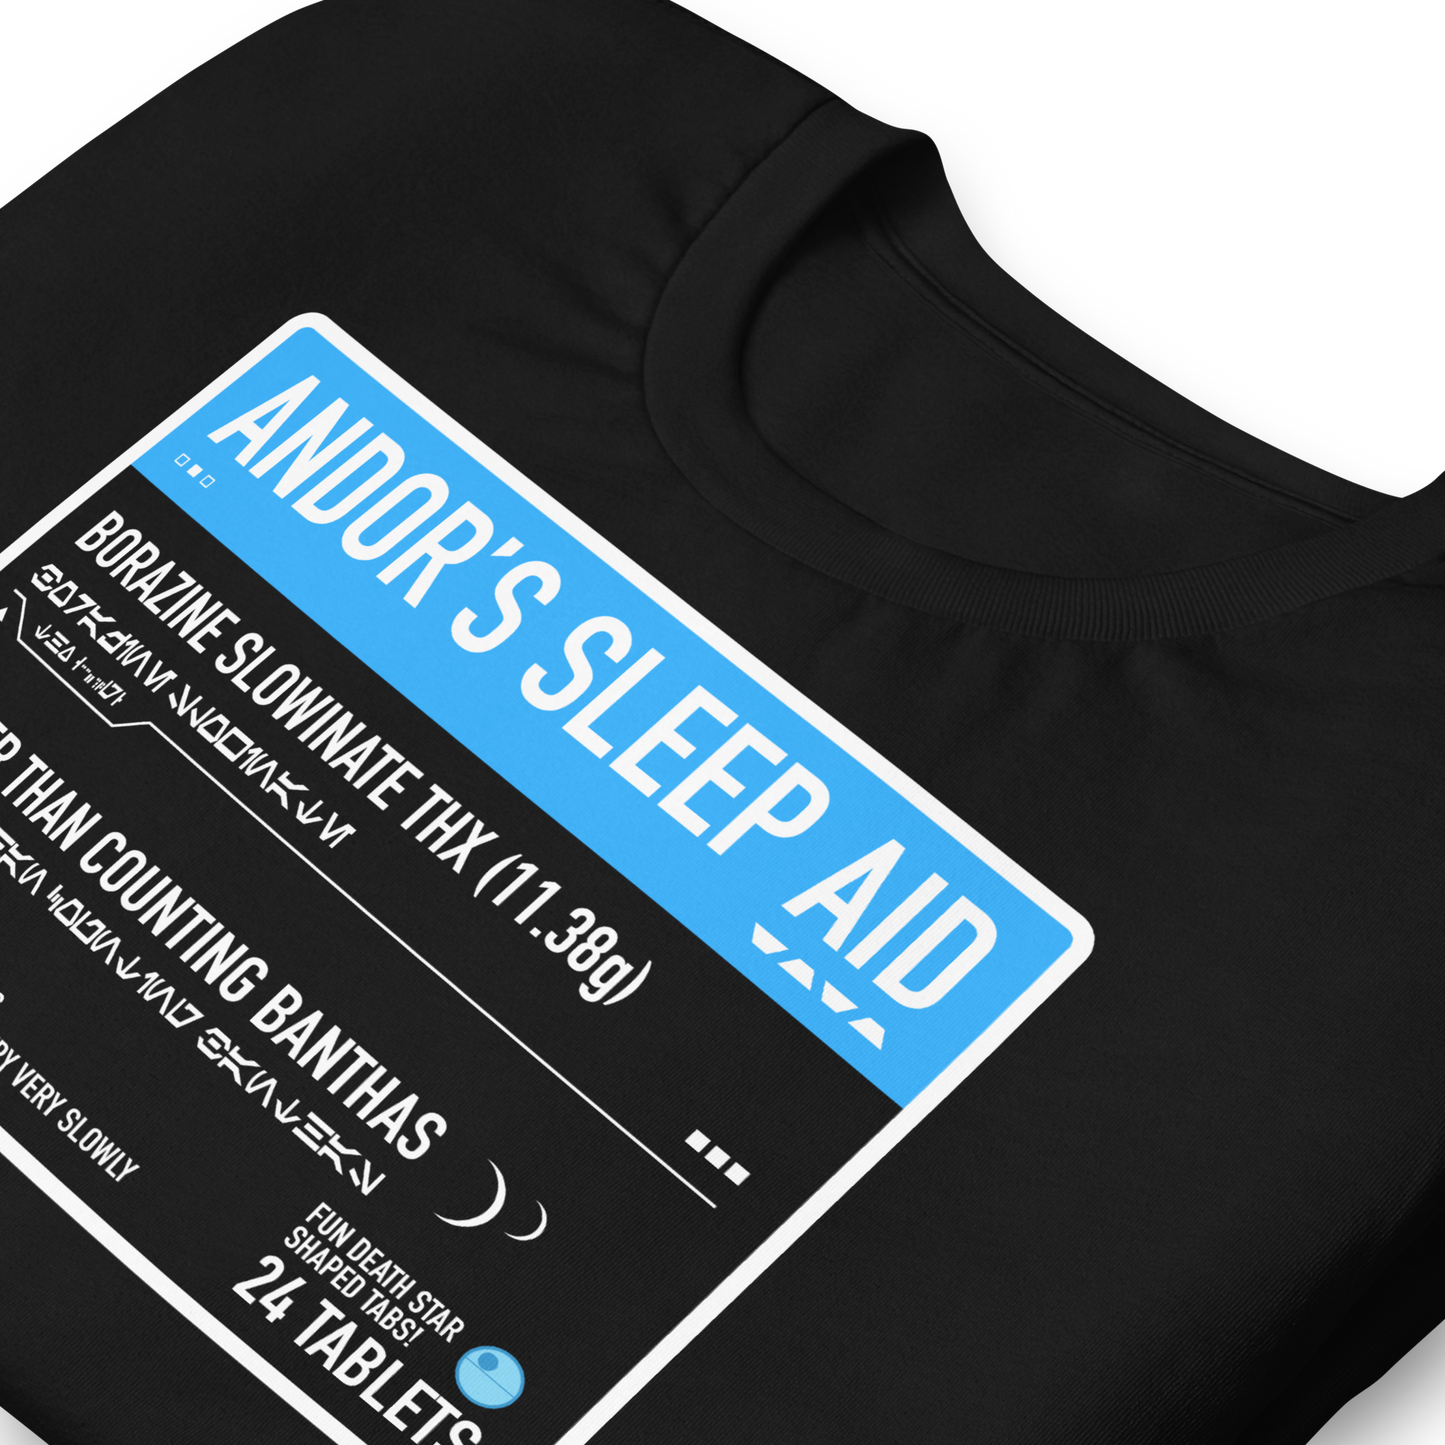 Unisex - Star Wars - Andor's Sleep Aid parody - Funny T-shirt